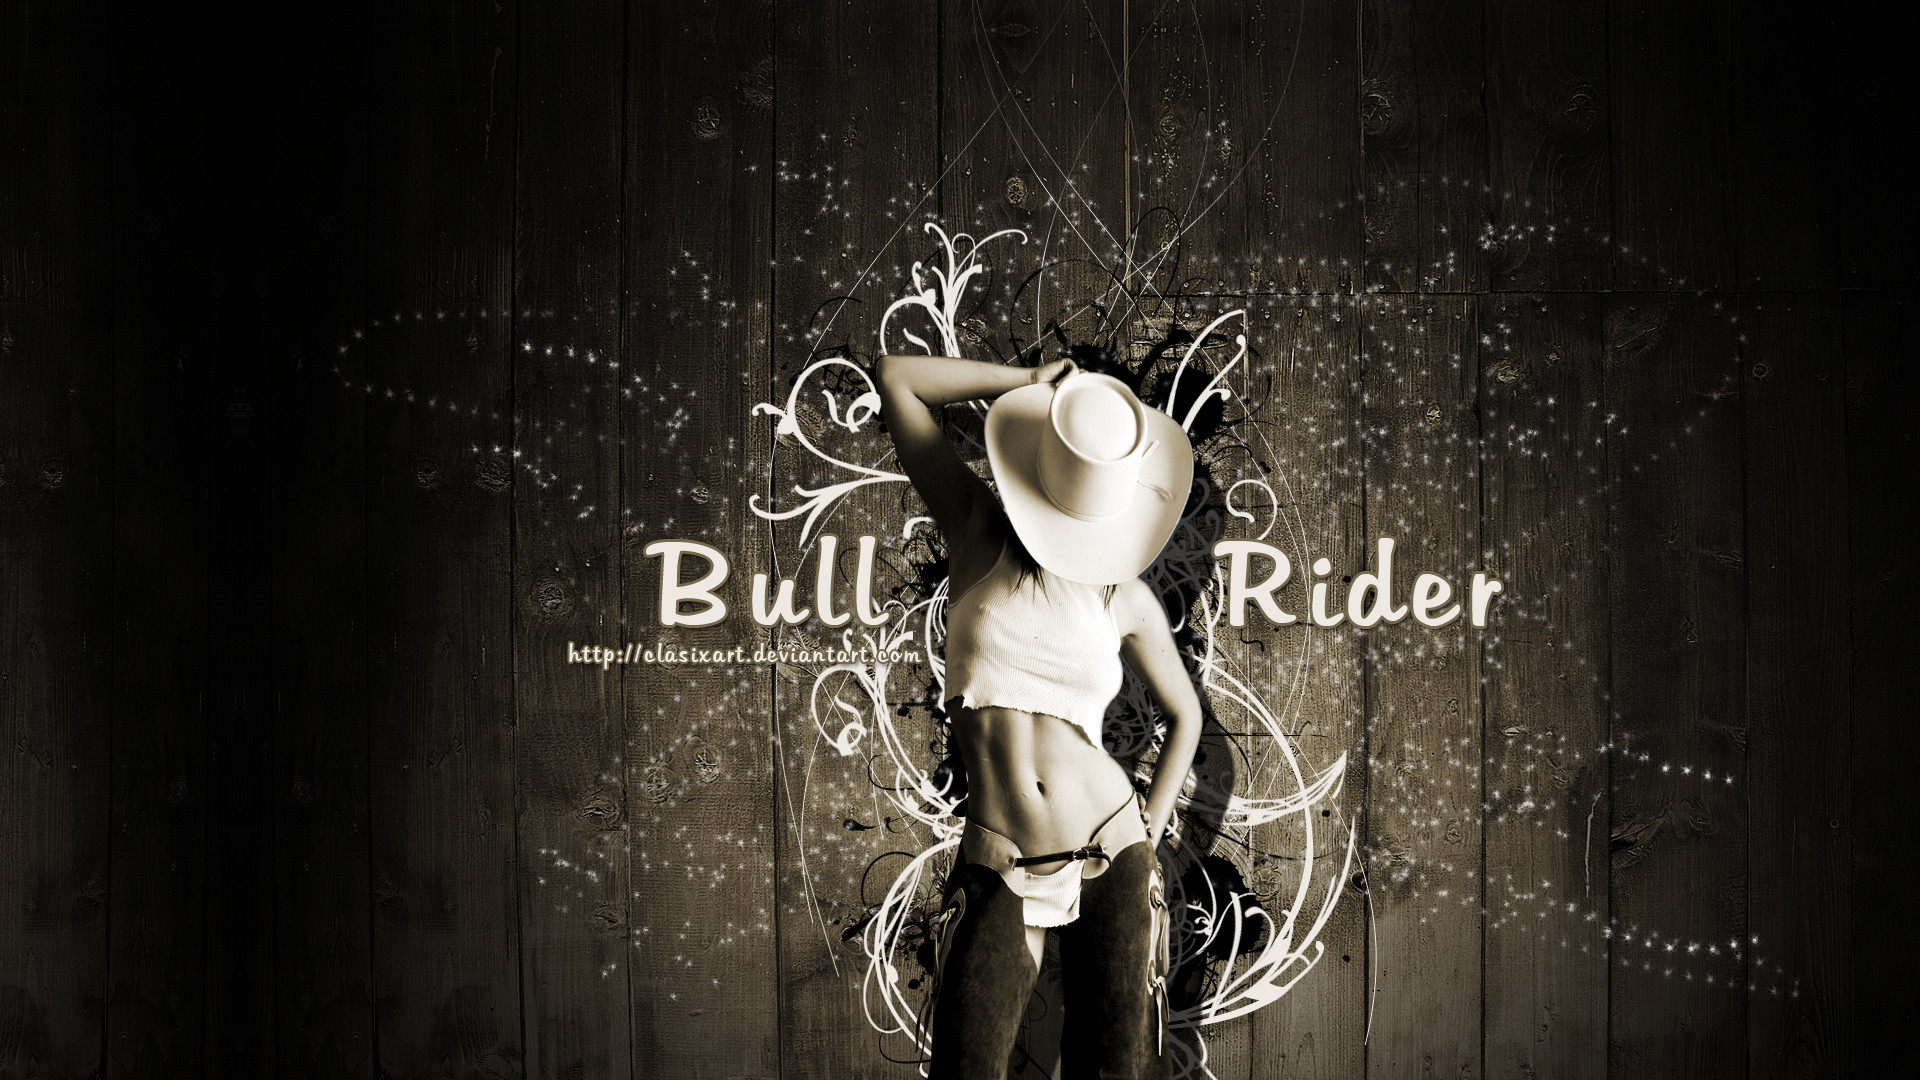 1920x1080 Wallpapers to Go Tulsa Incredible Bull Riding Backgrounds Wallpapersafari